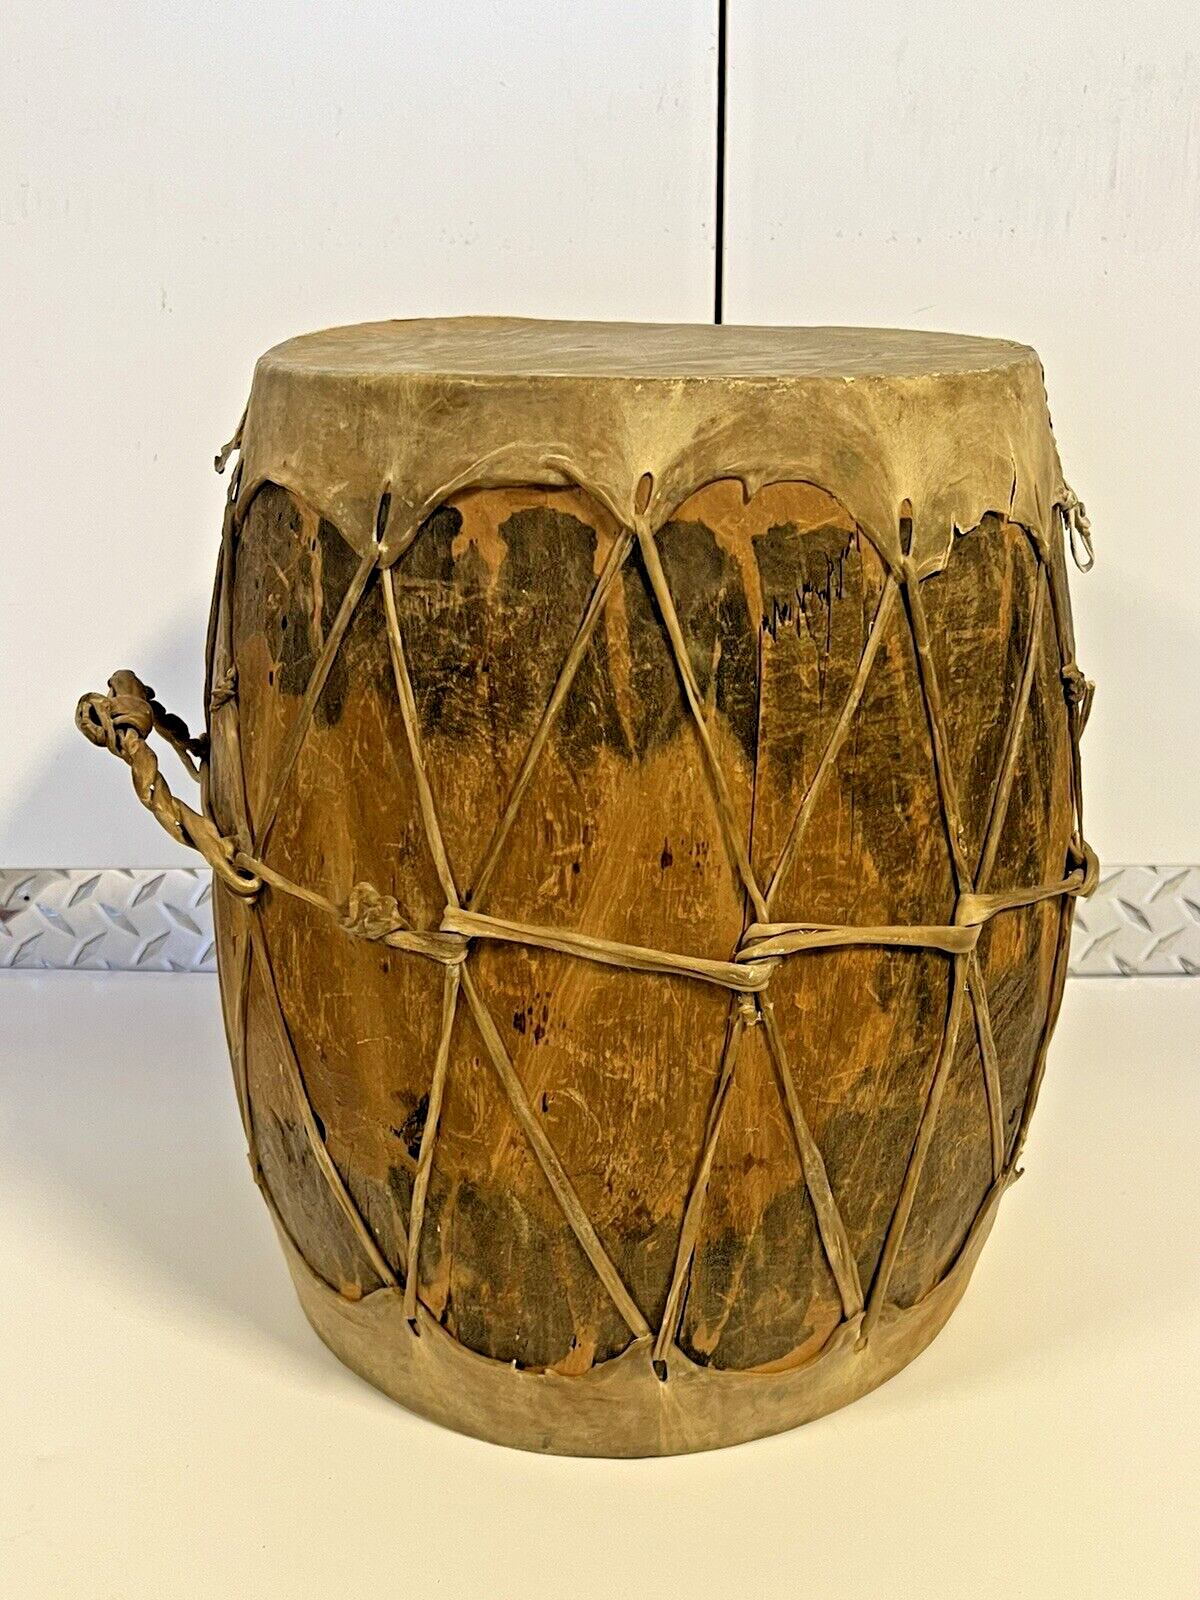 Antique Original Native American Indian Large Ceremonial Drum; 1890's to 1930's